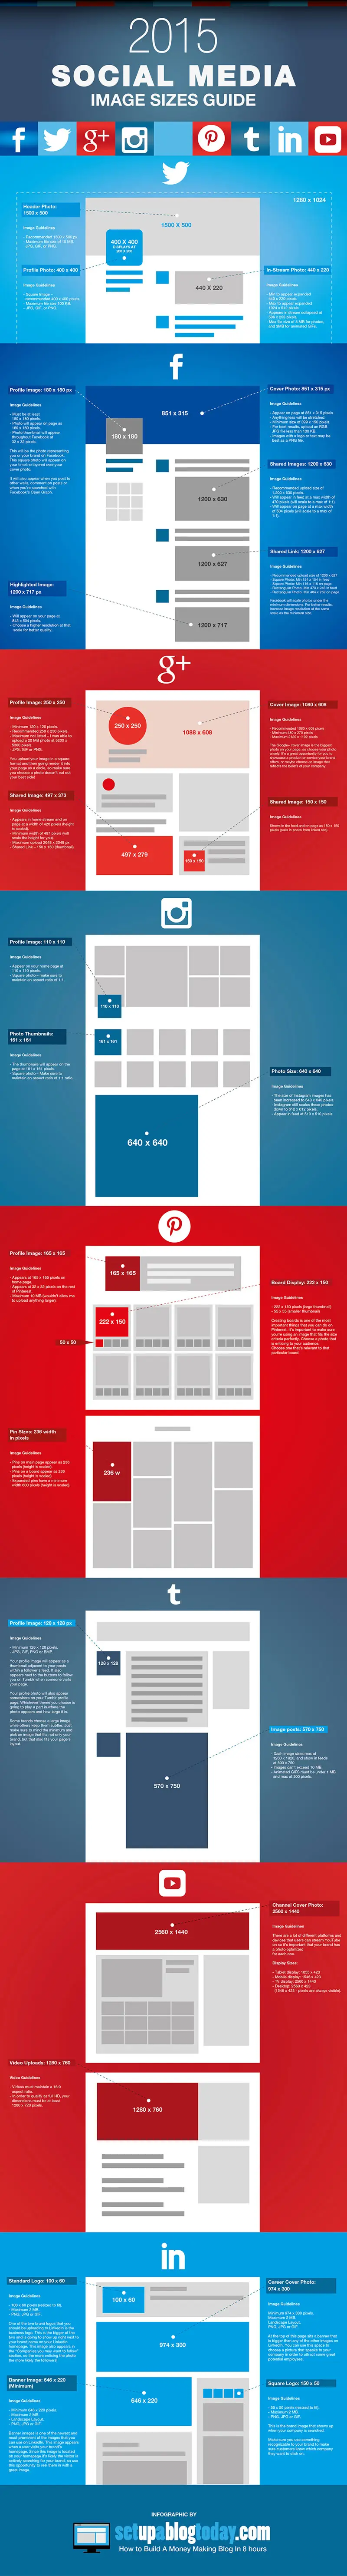 Social media image sizes infographic 2015